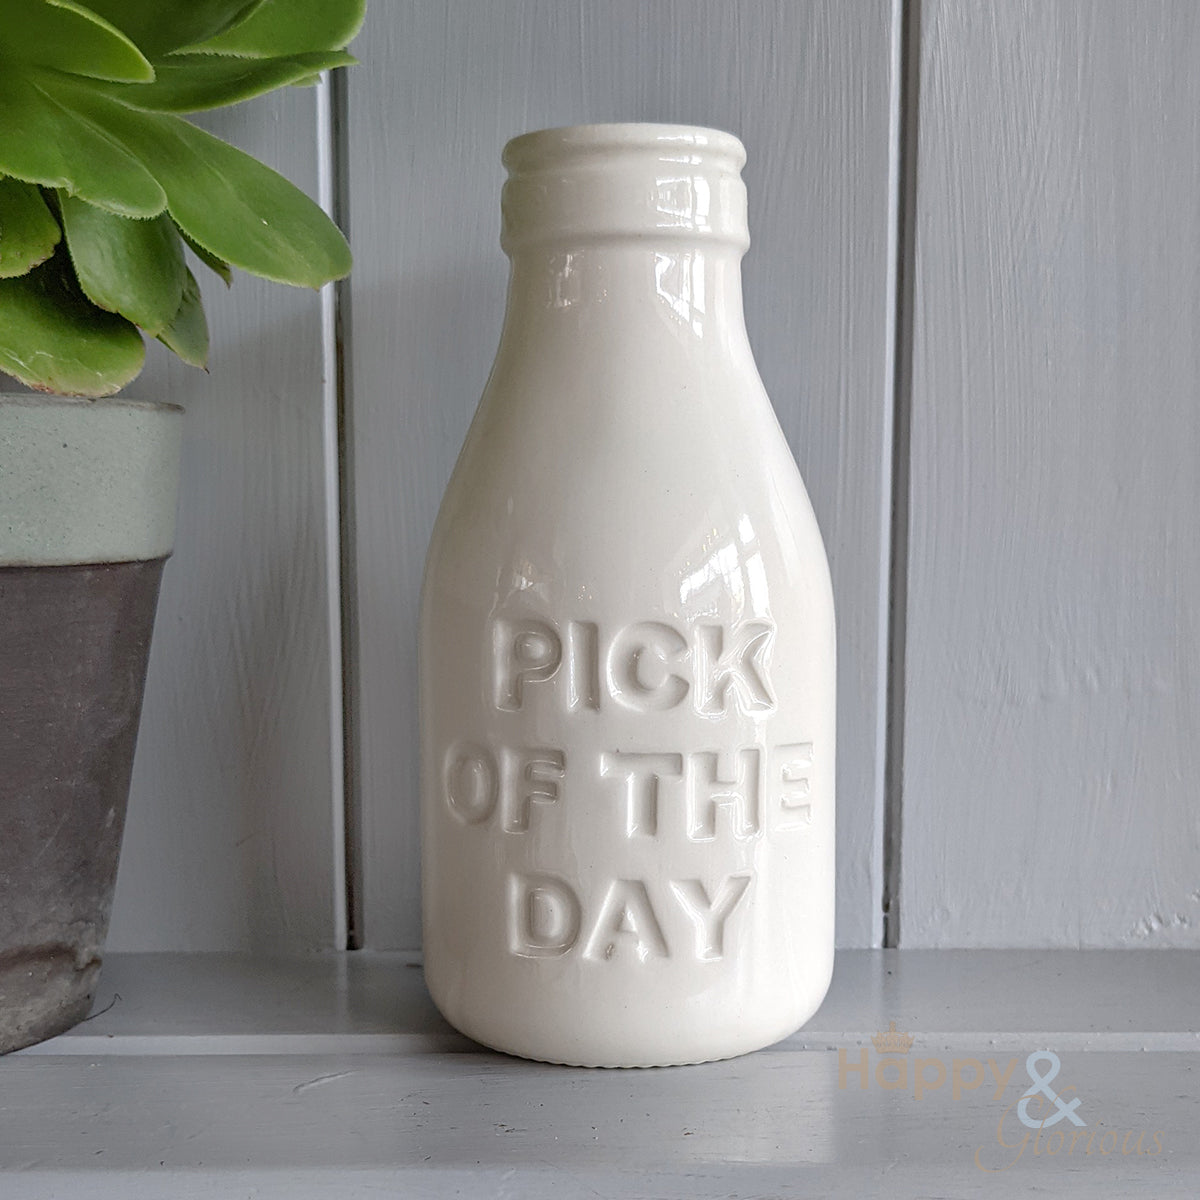 Ceramic 'Pick of the Day' bottle vase